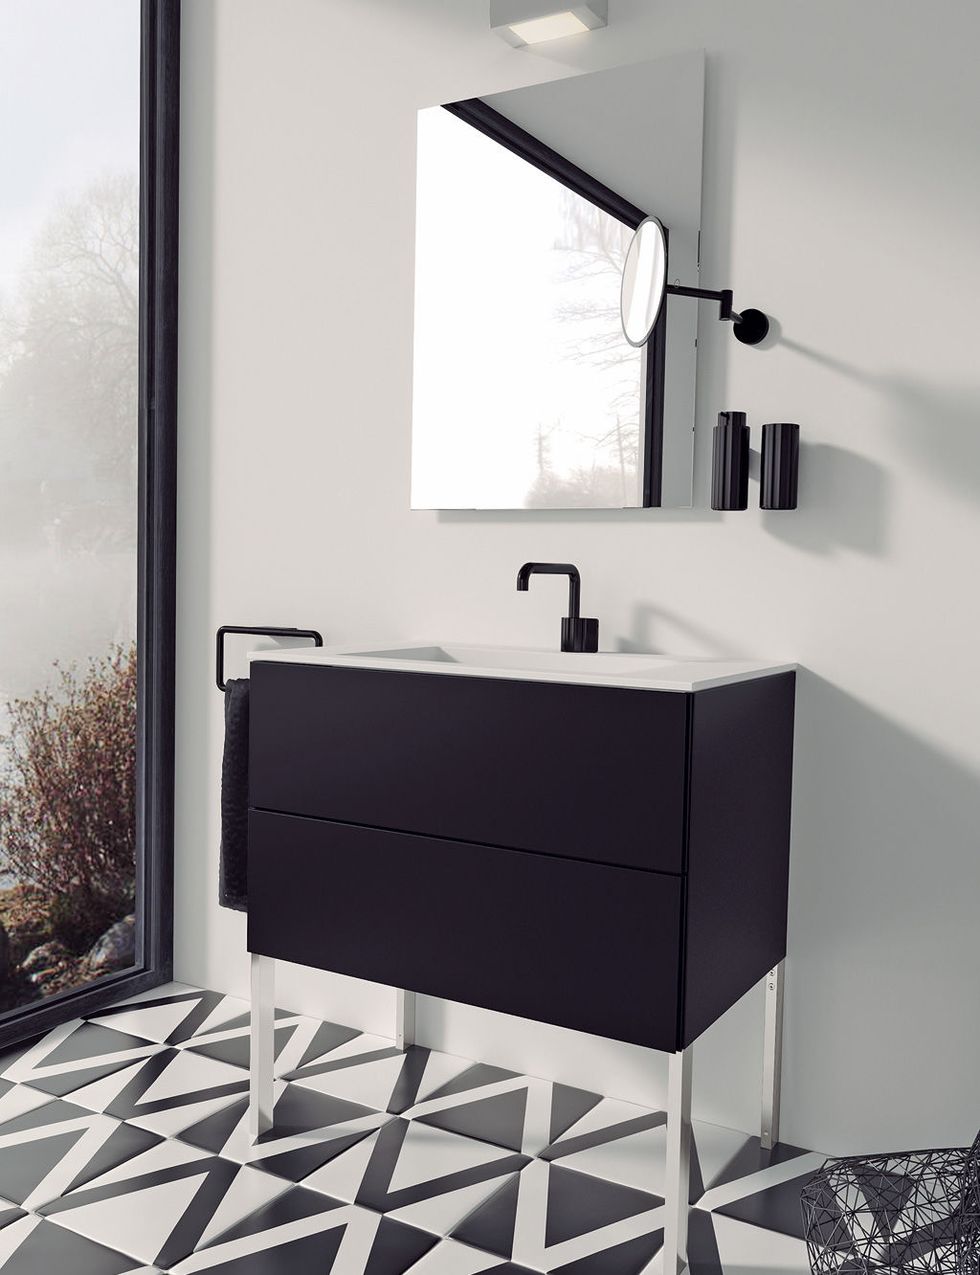 Interior design, Room, Floor, Wall, Plumbing fixture, Bathroom sink, Fixture, Grey, Black-and-white, Monochrome photography, 